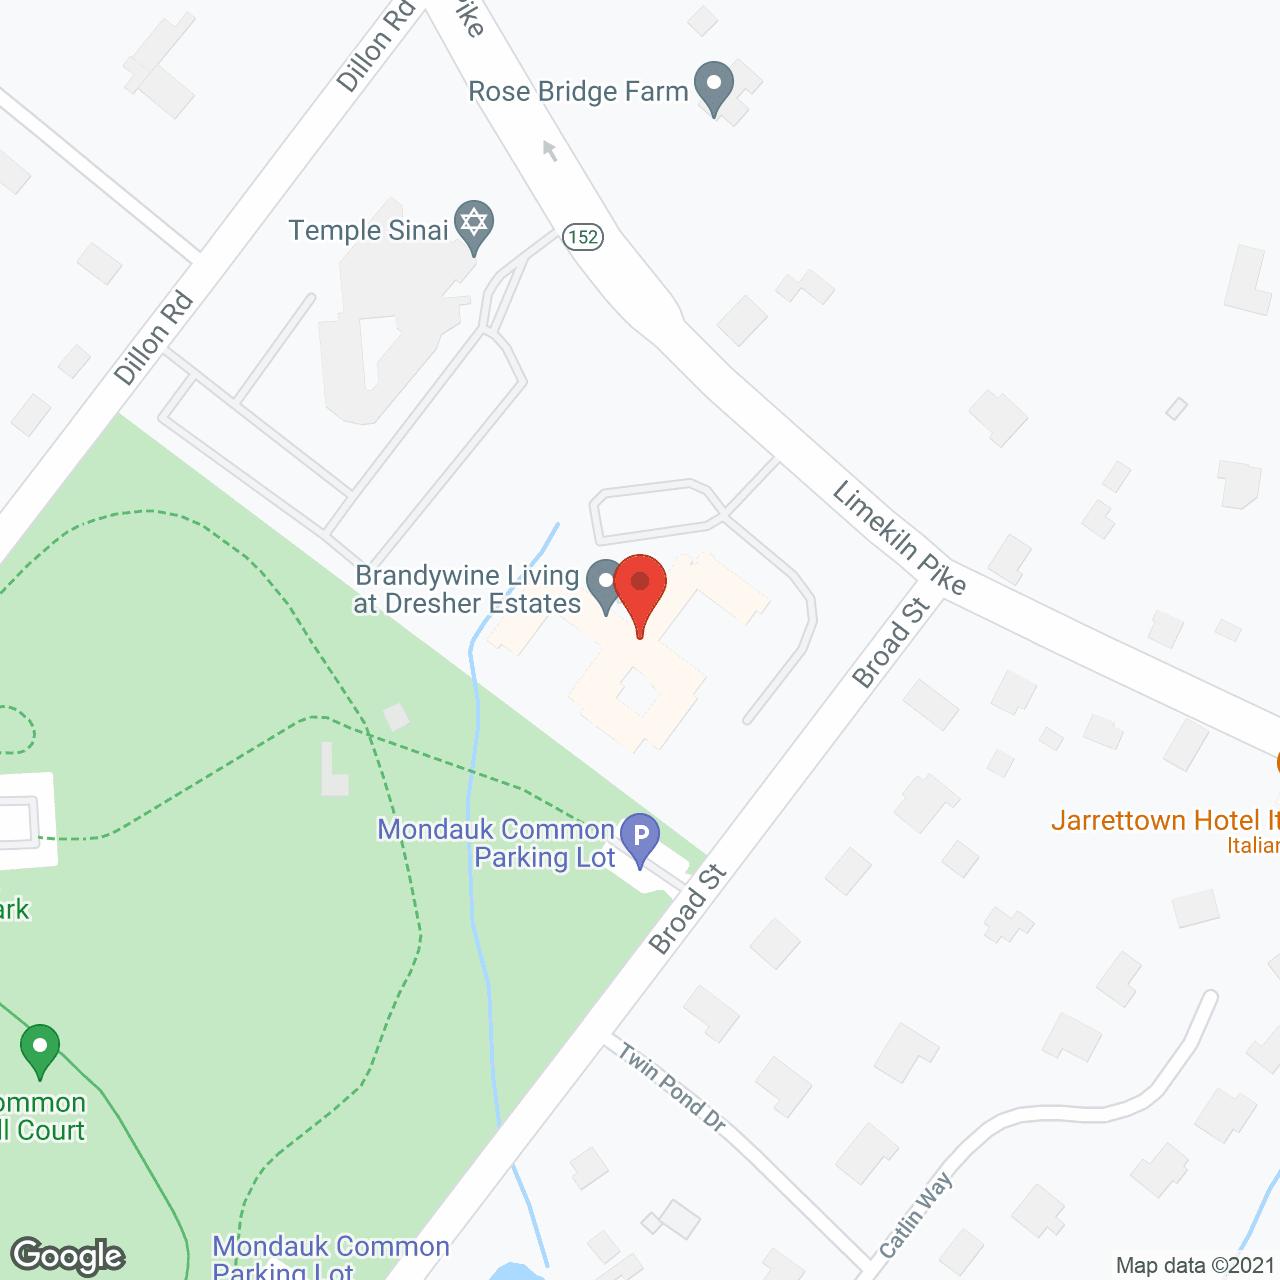 Brandywine at Dresher Estates in google map